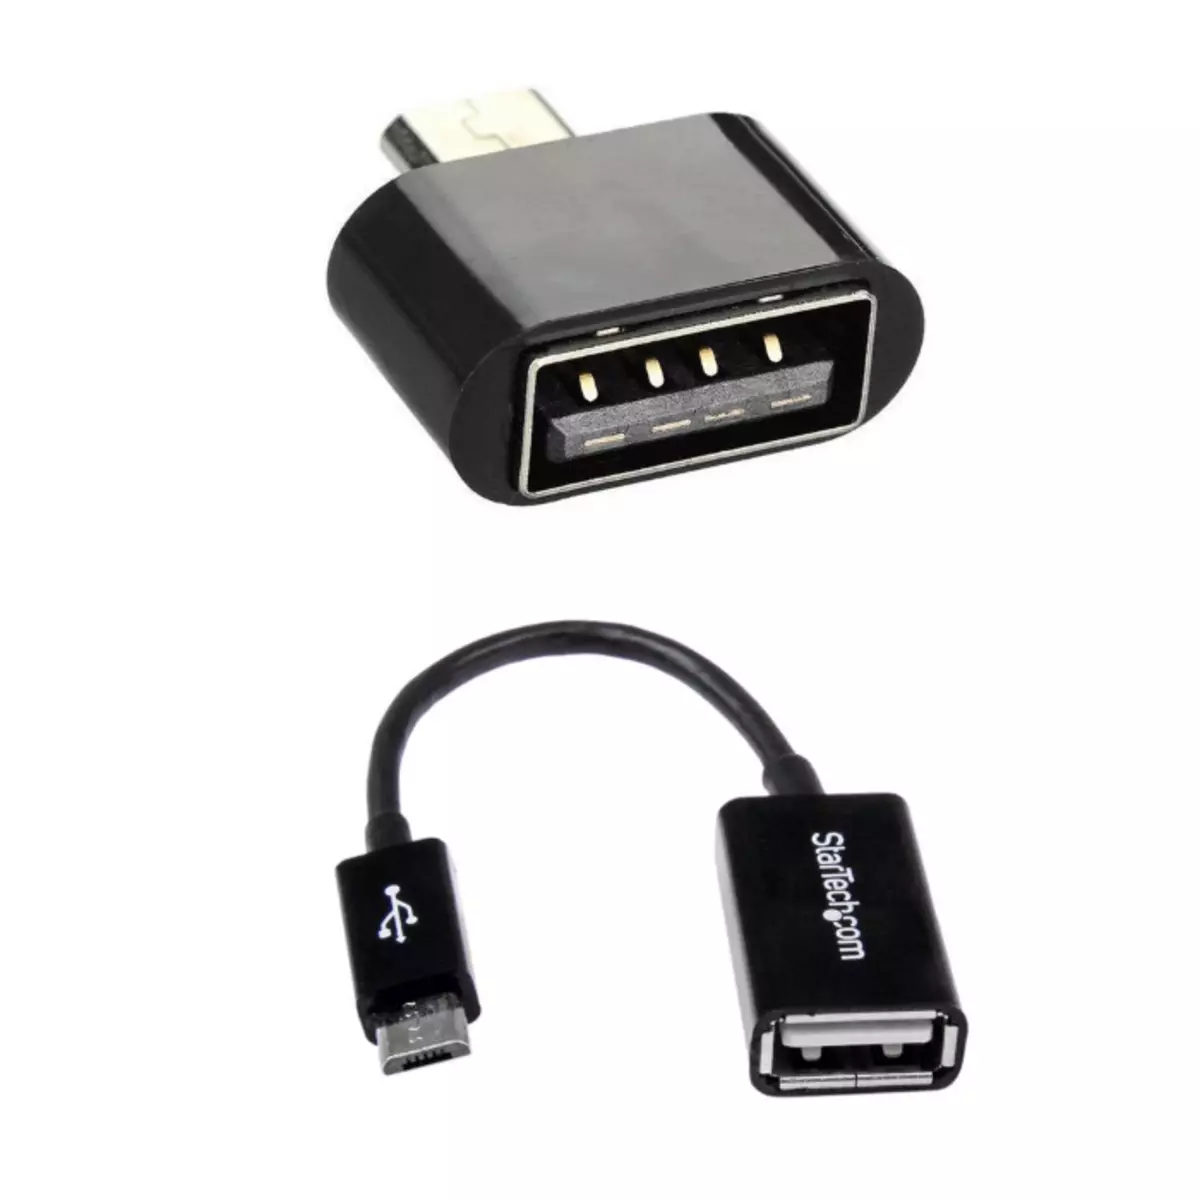 USB OTG kabel vir Wired Gamepad opstel in Android